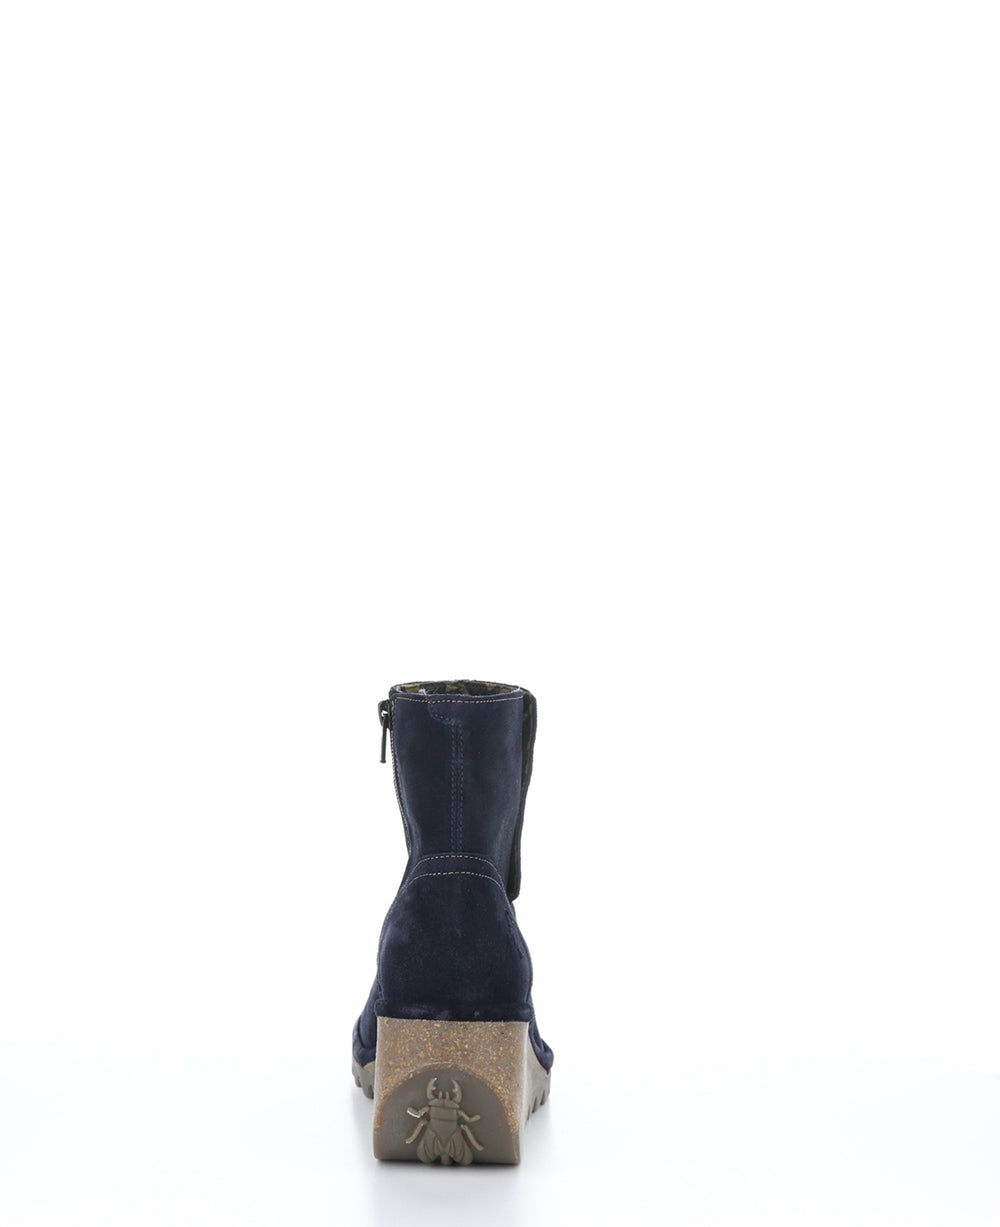 NERY336FLY Navy Zip Up Ankle Boots|NERY336FLY Bottines avec Fermeture Zippée in Bleu